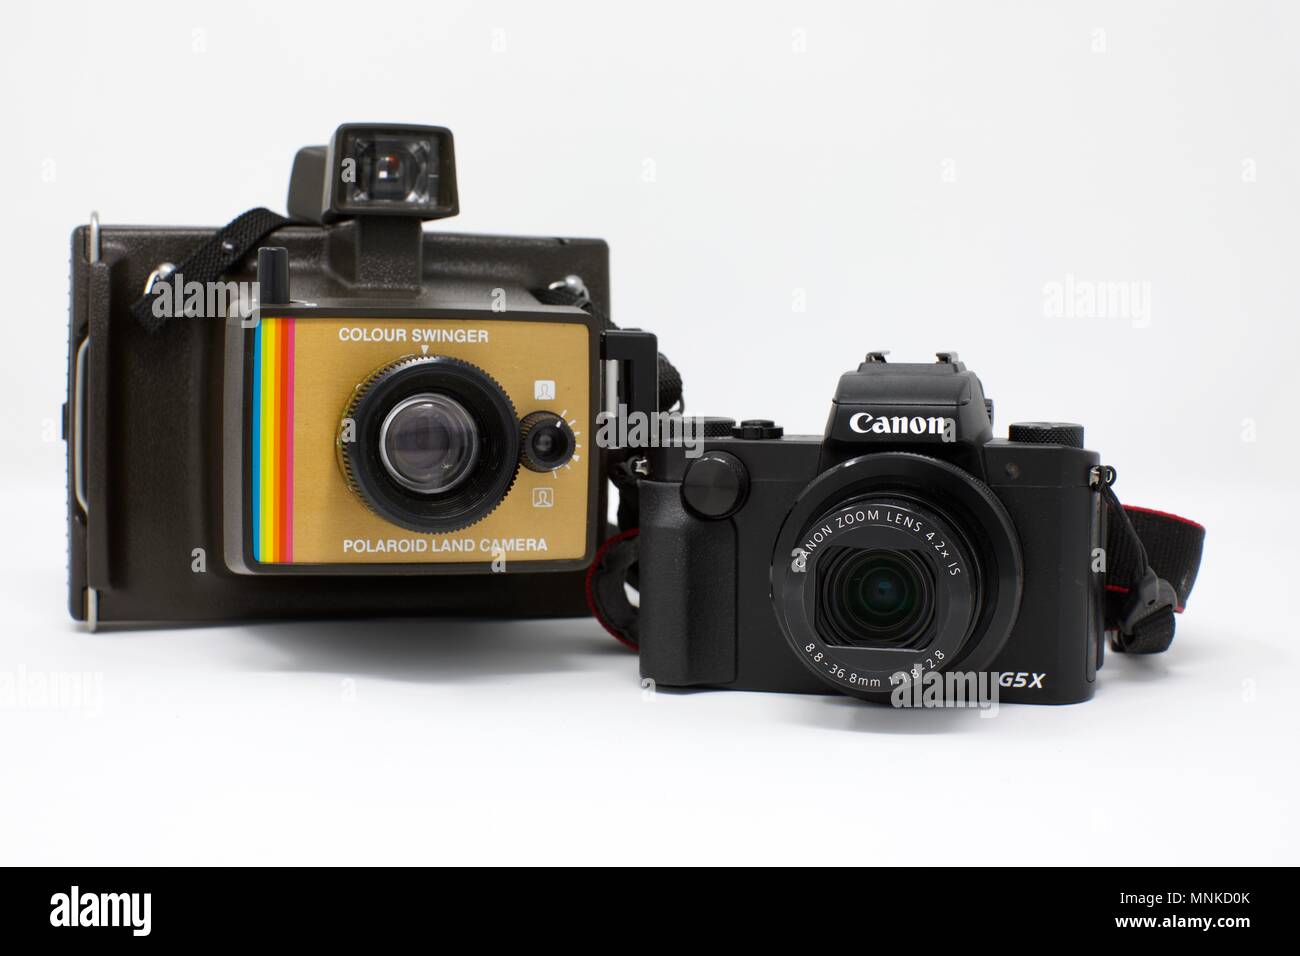 1975 Polaroid Colour Swinger Camera next to a modern Canon PowerShot G5 X Camera Stock Photo